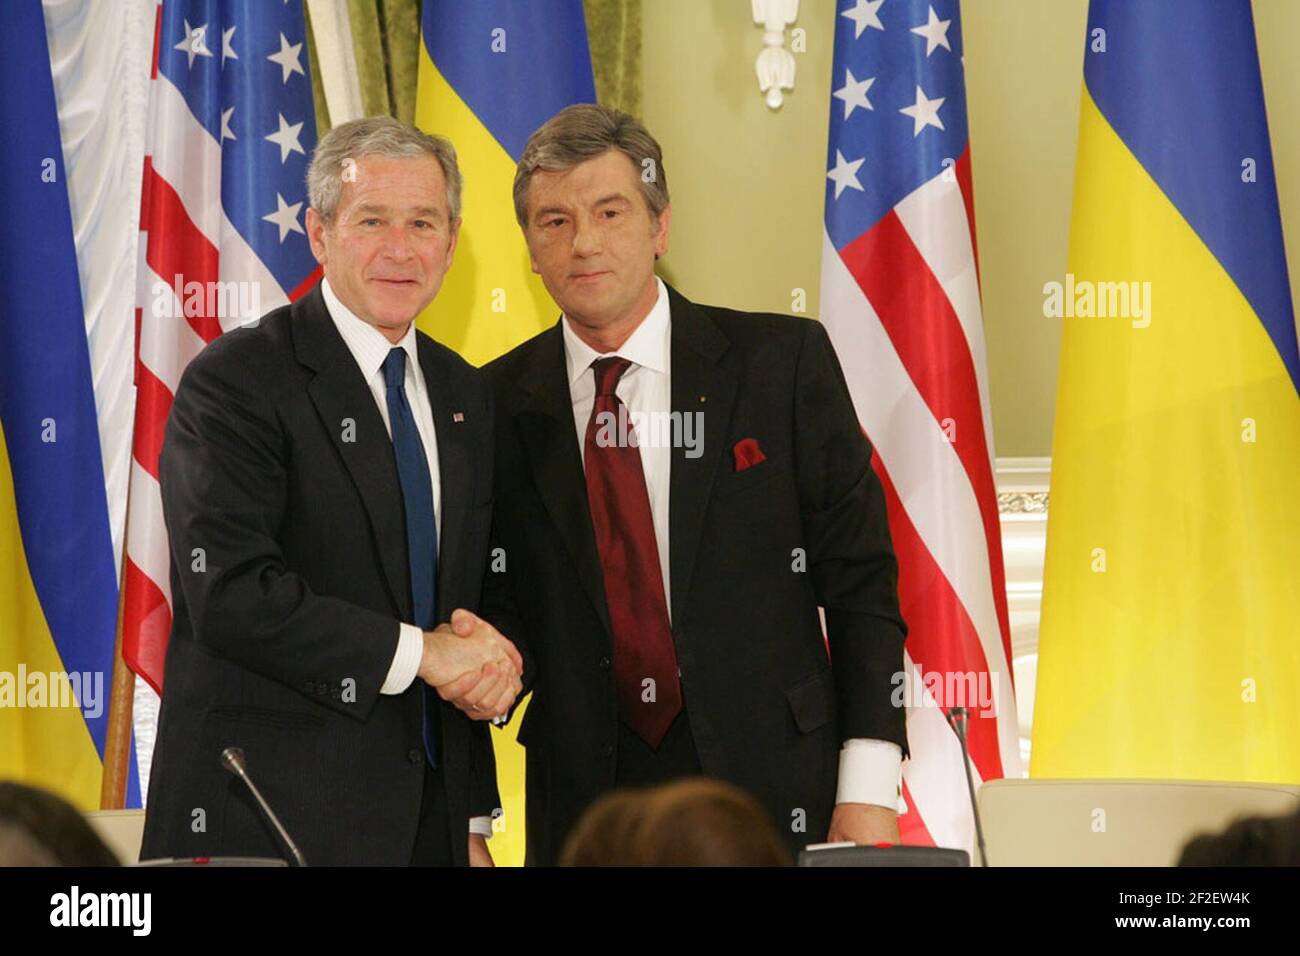 President George W. Bush and President Viktor Yushchenko of the Ukraine Shake Hands. Stock Photo